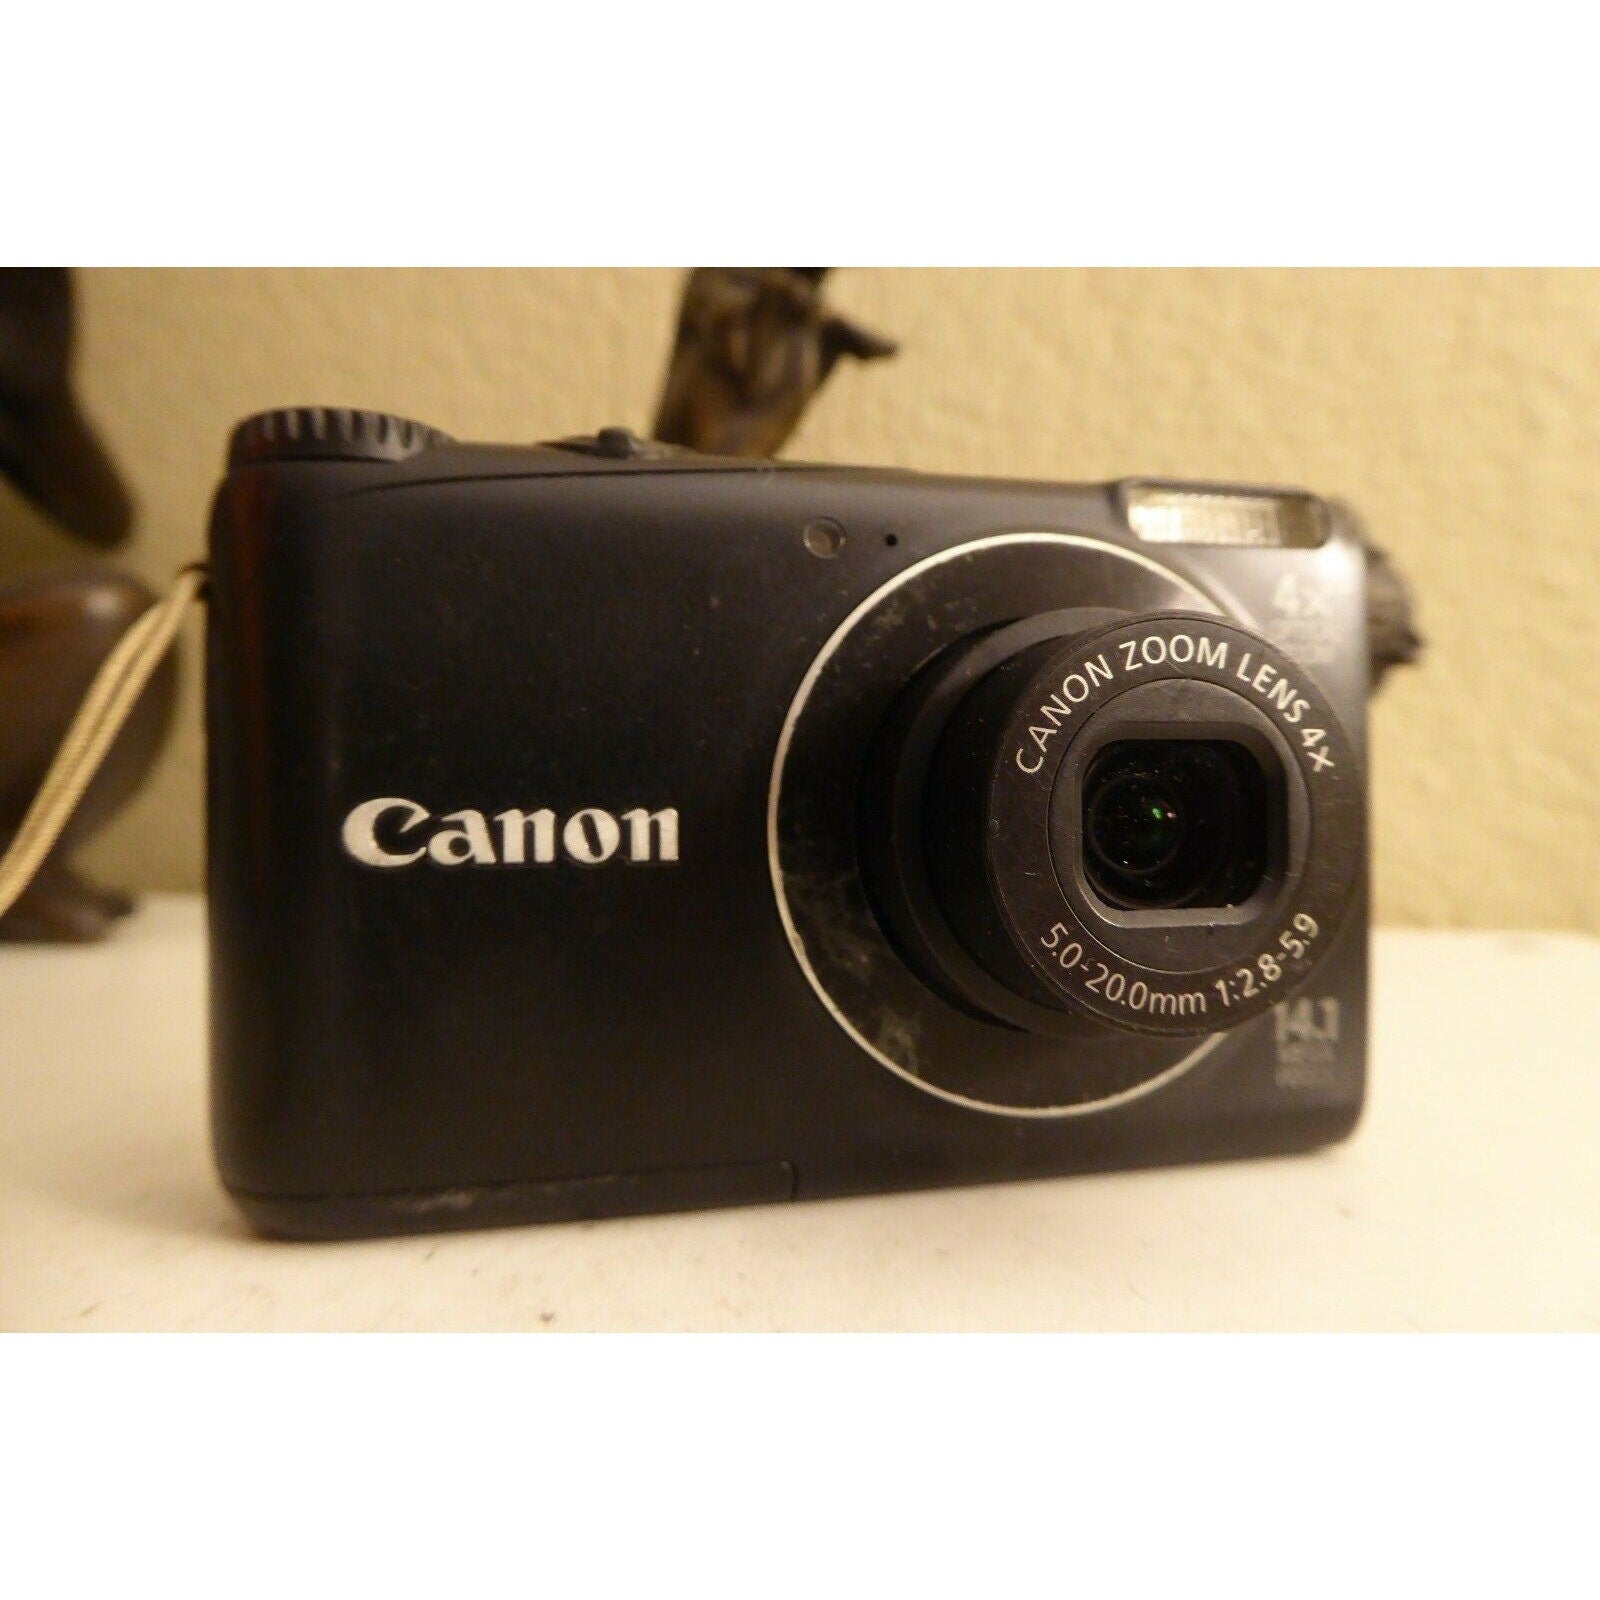 Canon Powershot A2200 14.1 MP Digital Camera 4x Optical Zoom Black